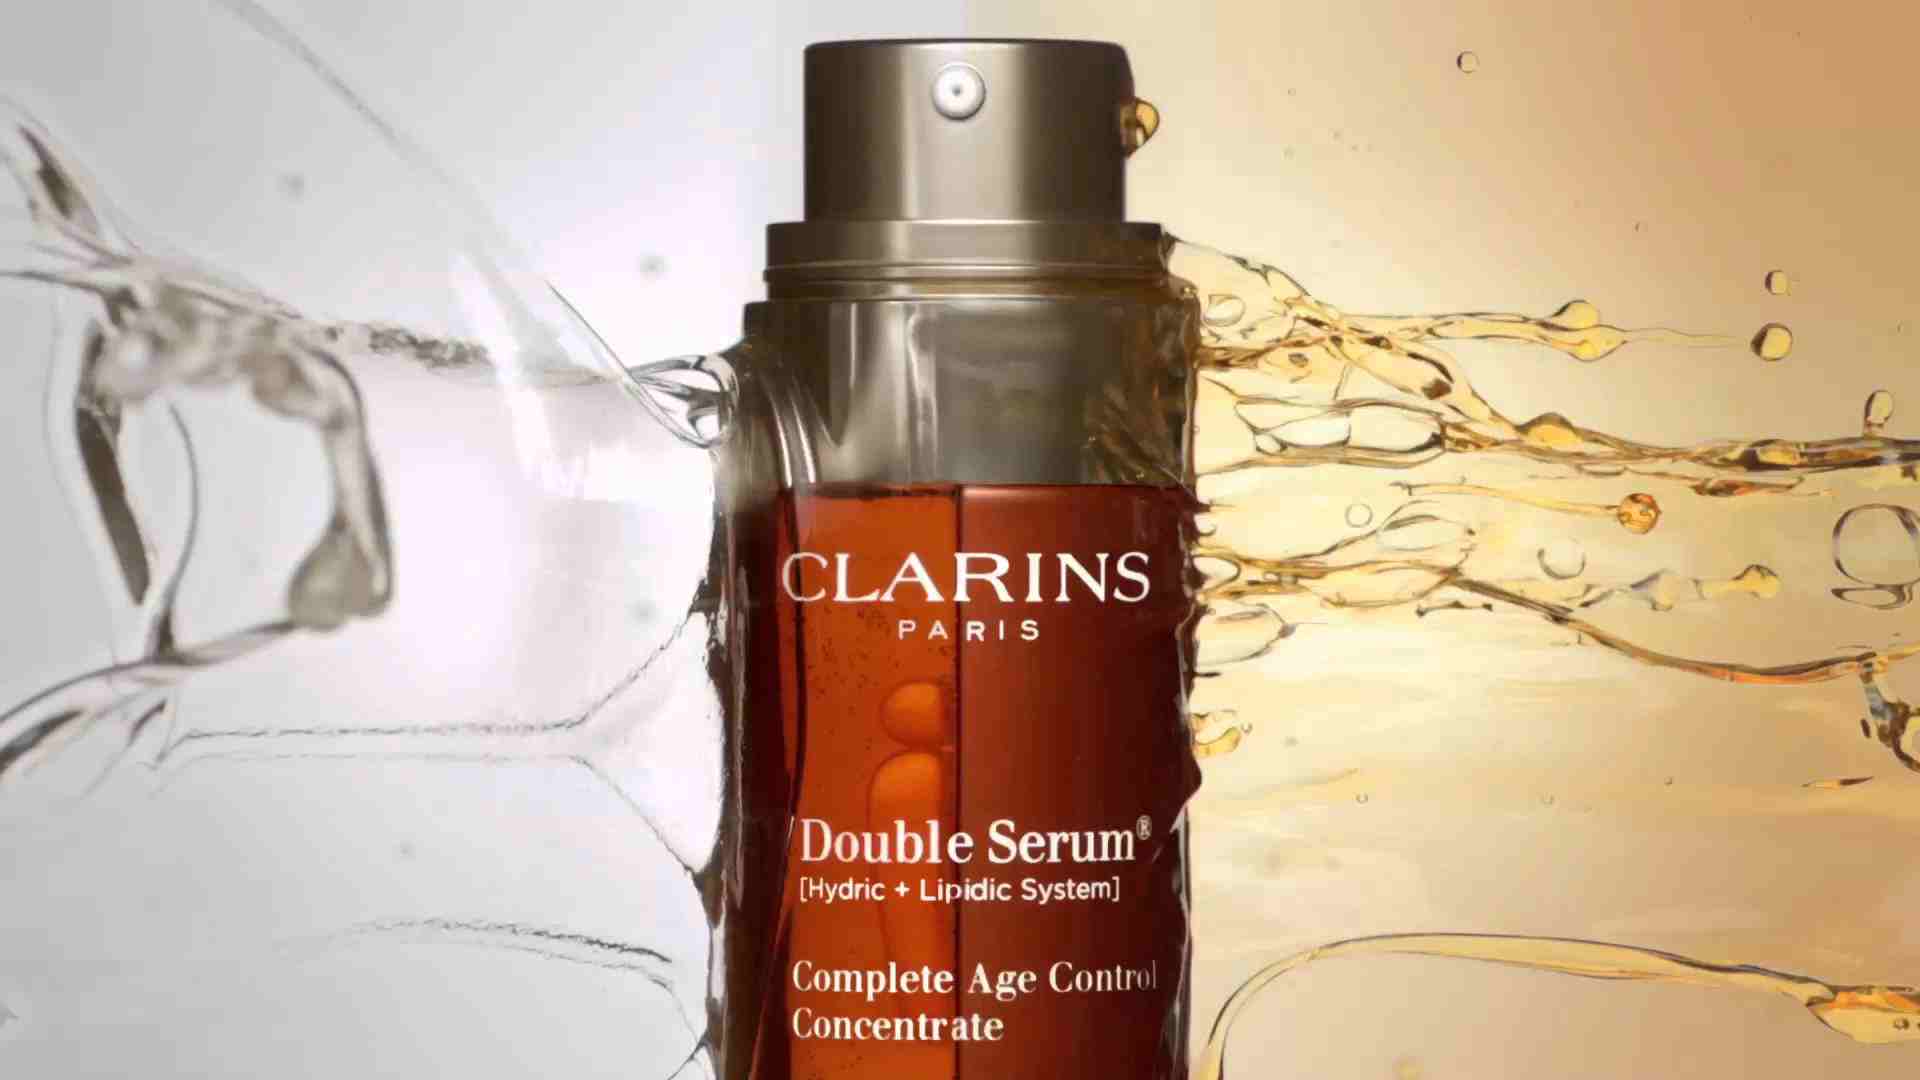 Double serum clarins